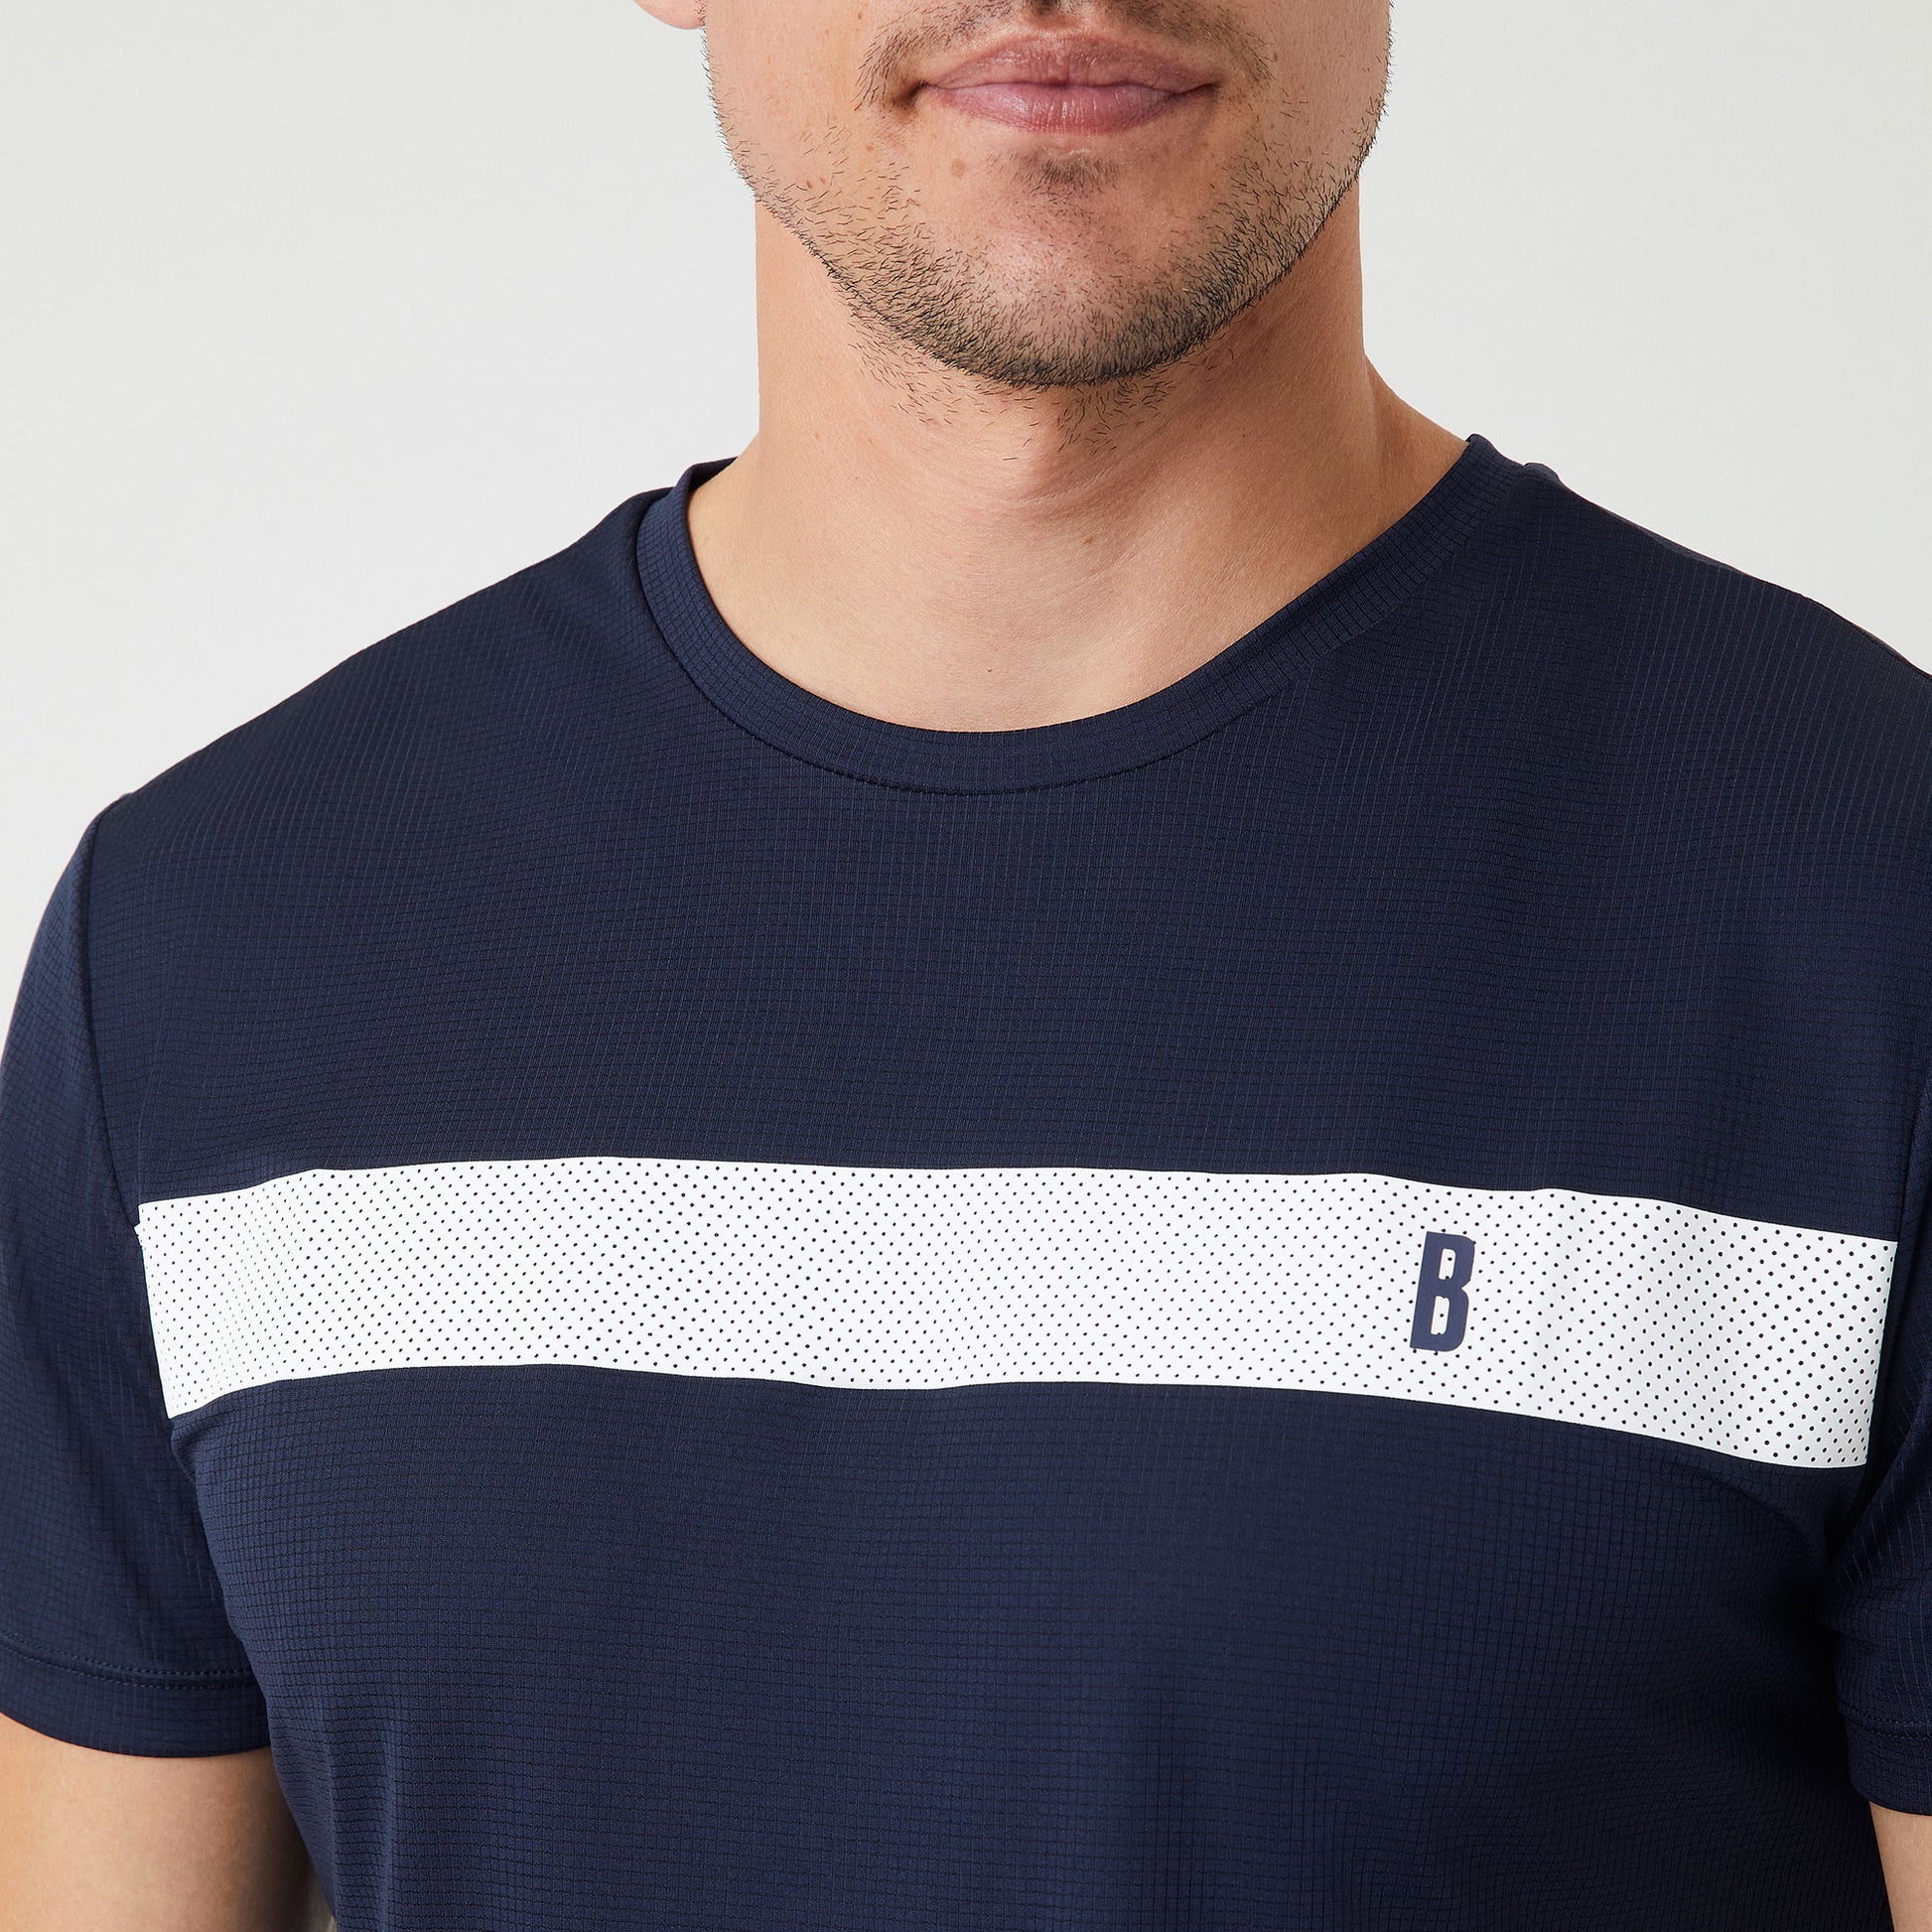 Björn Borg Ace Men's Light Tennis Shirt Dark Blue (4)